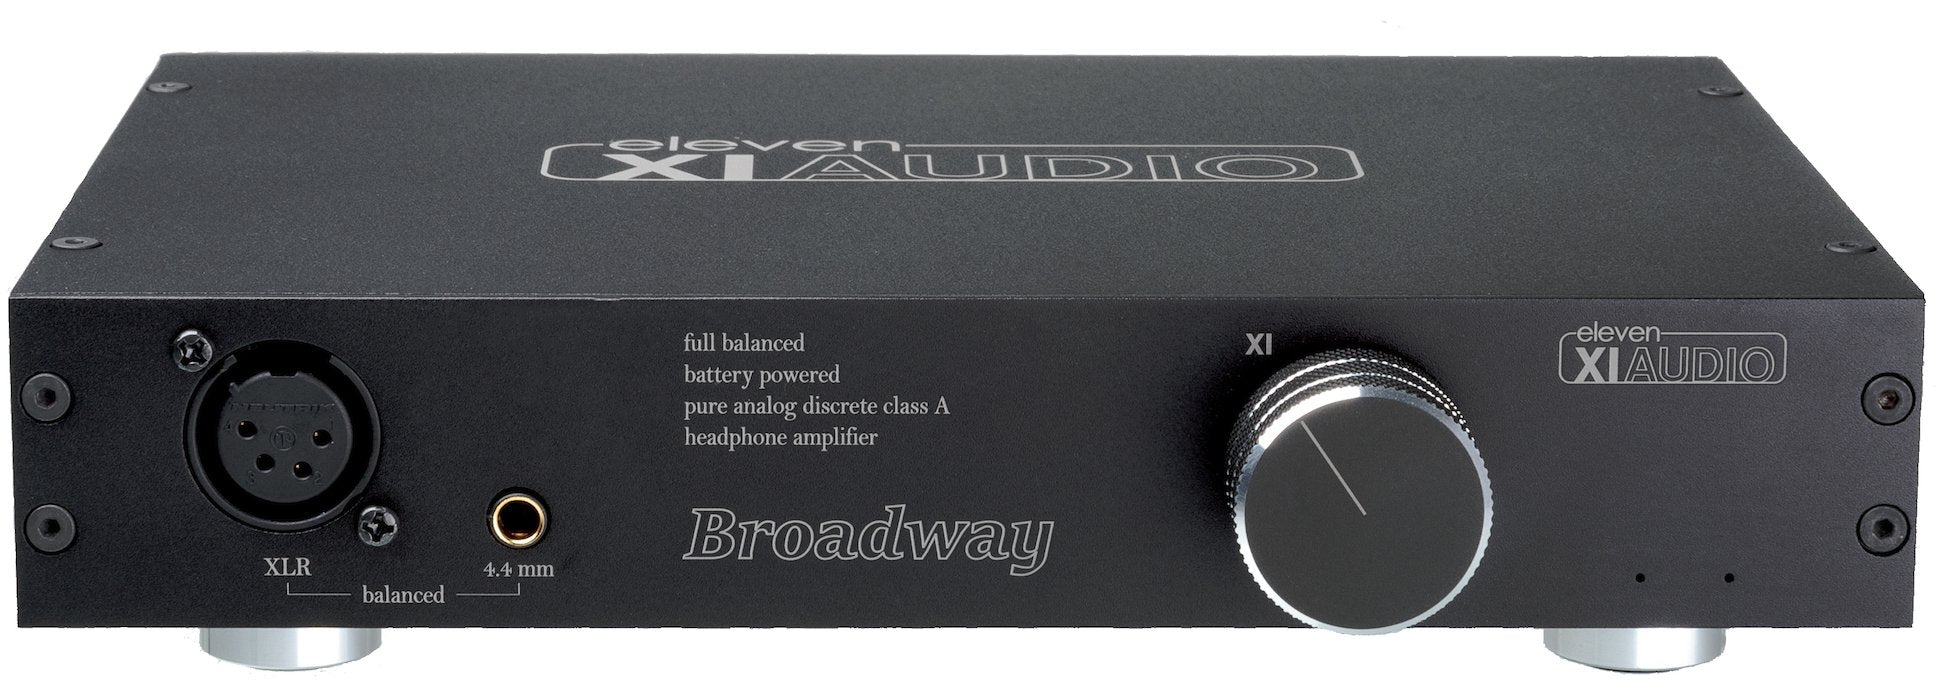 Broadway Balanced by Eleven Audio Headphone Amplifier